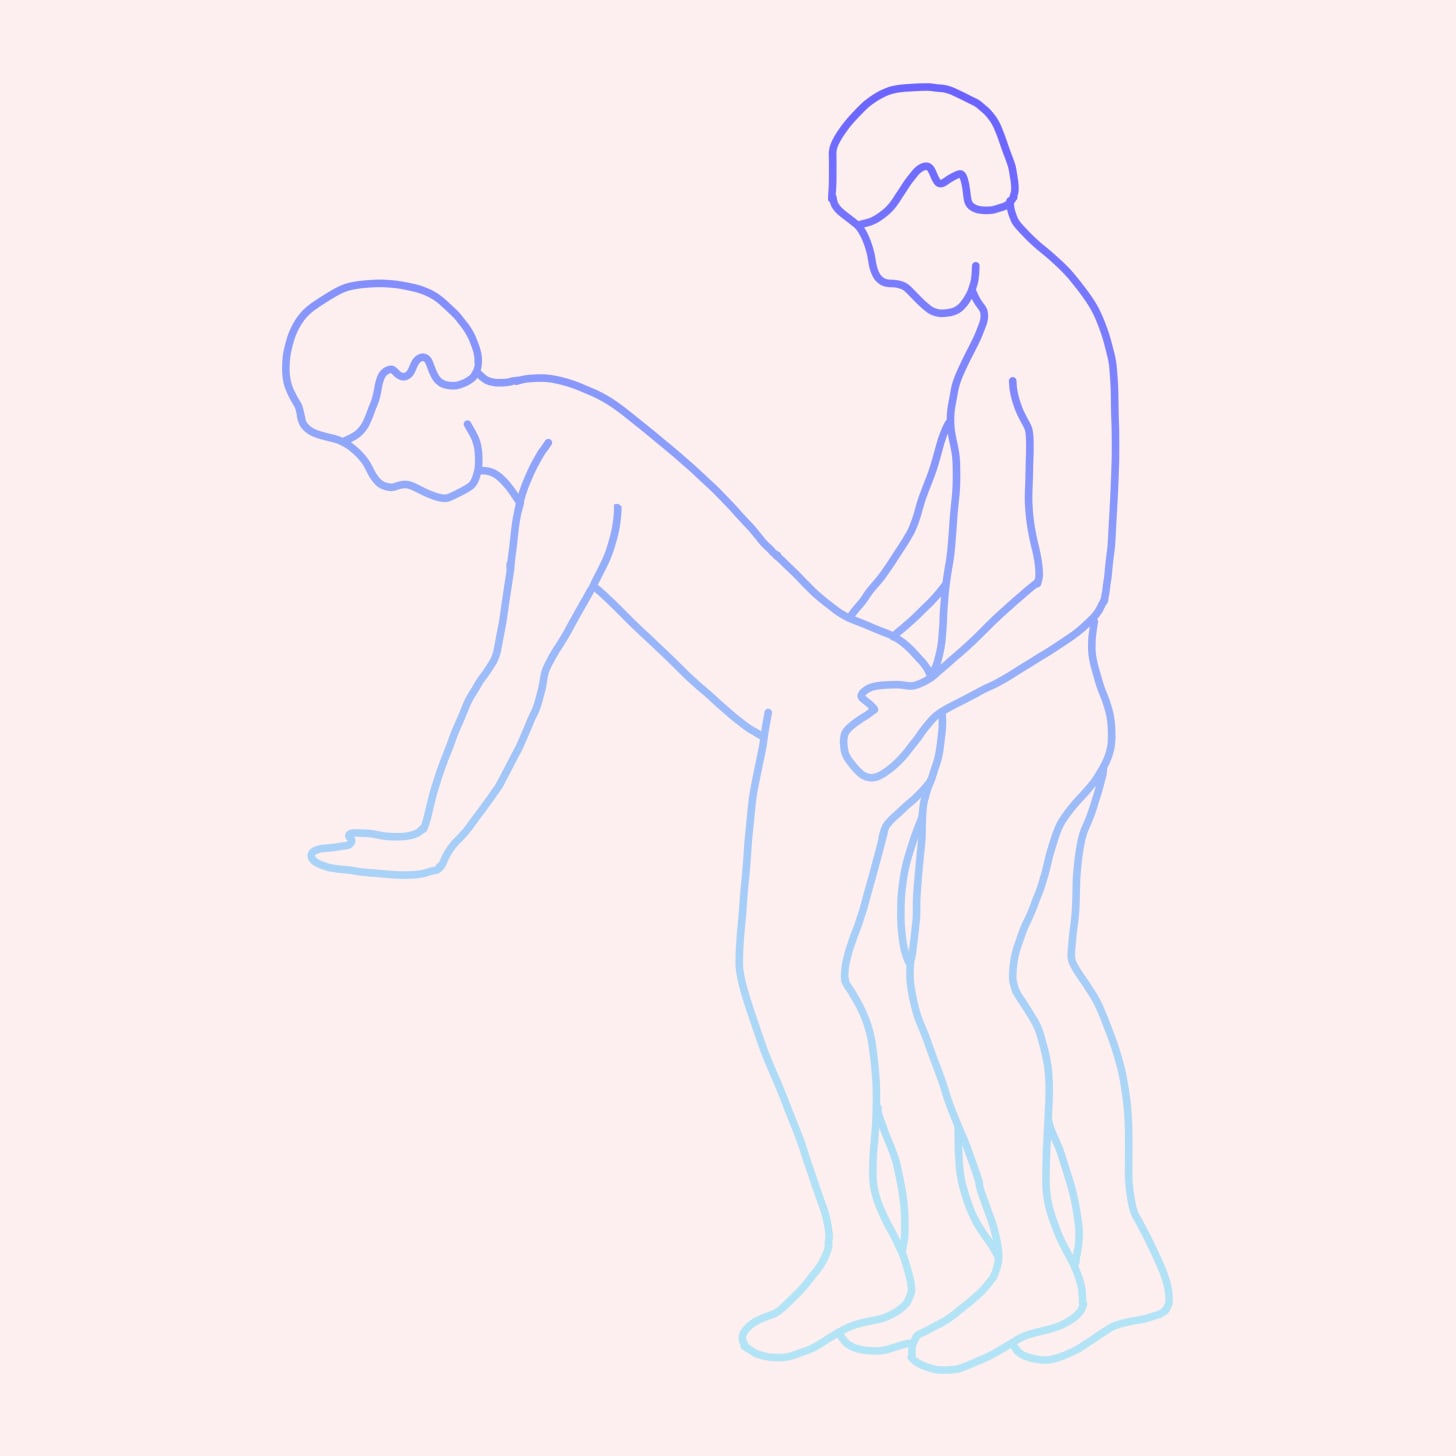 The Hang Ten Sex Position